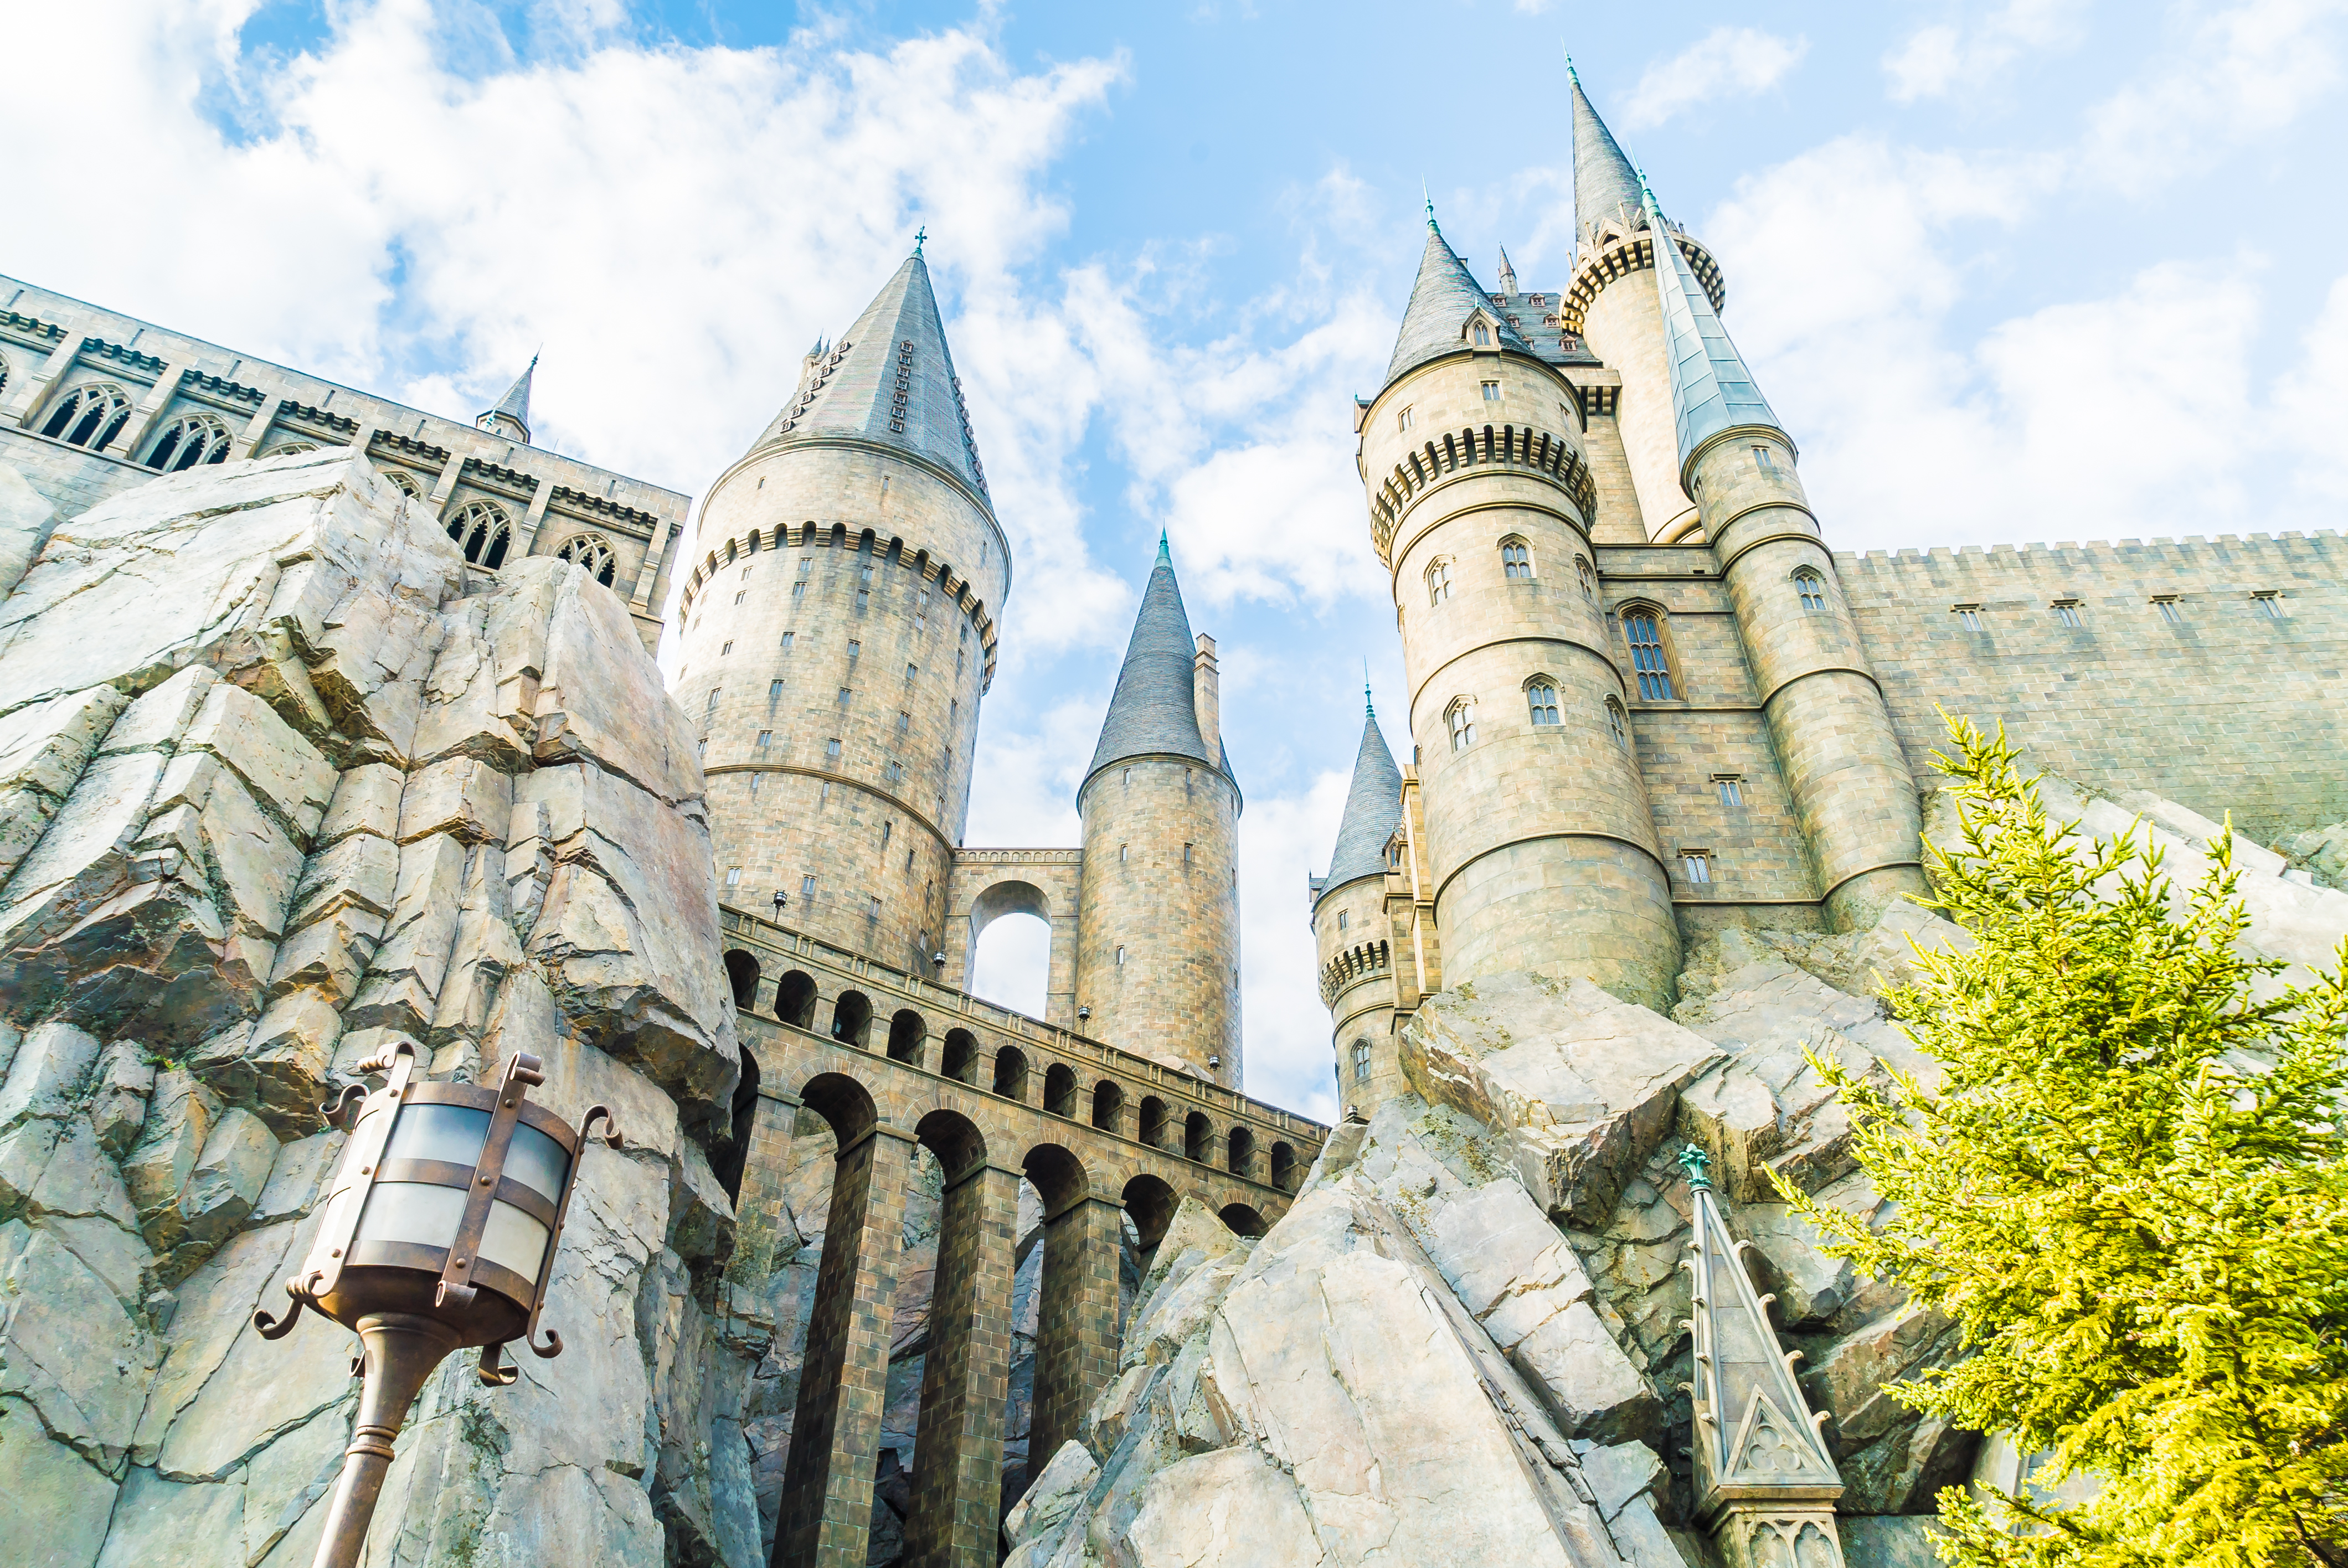 Hogwarts castle from Harry Potter. 